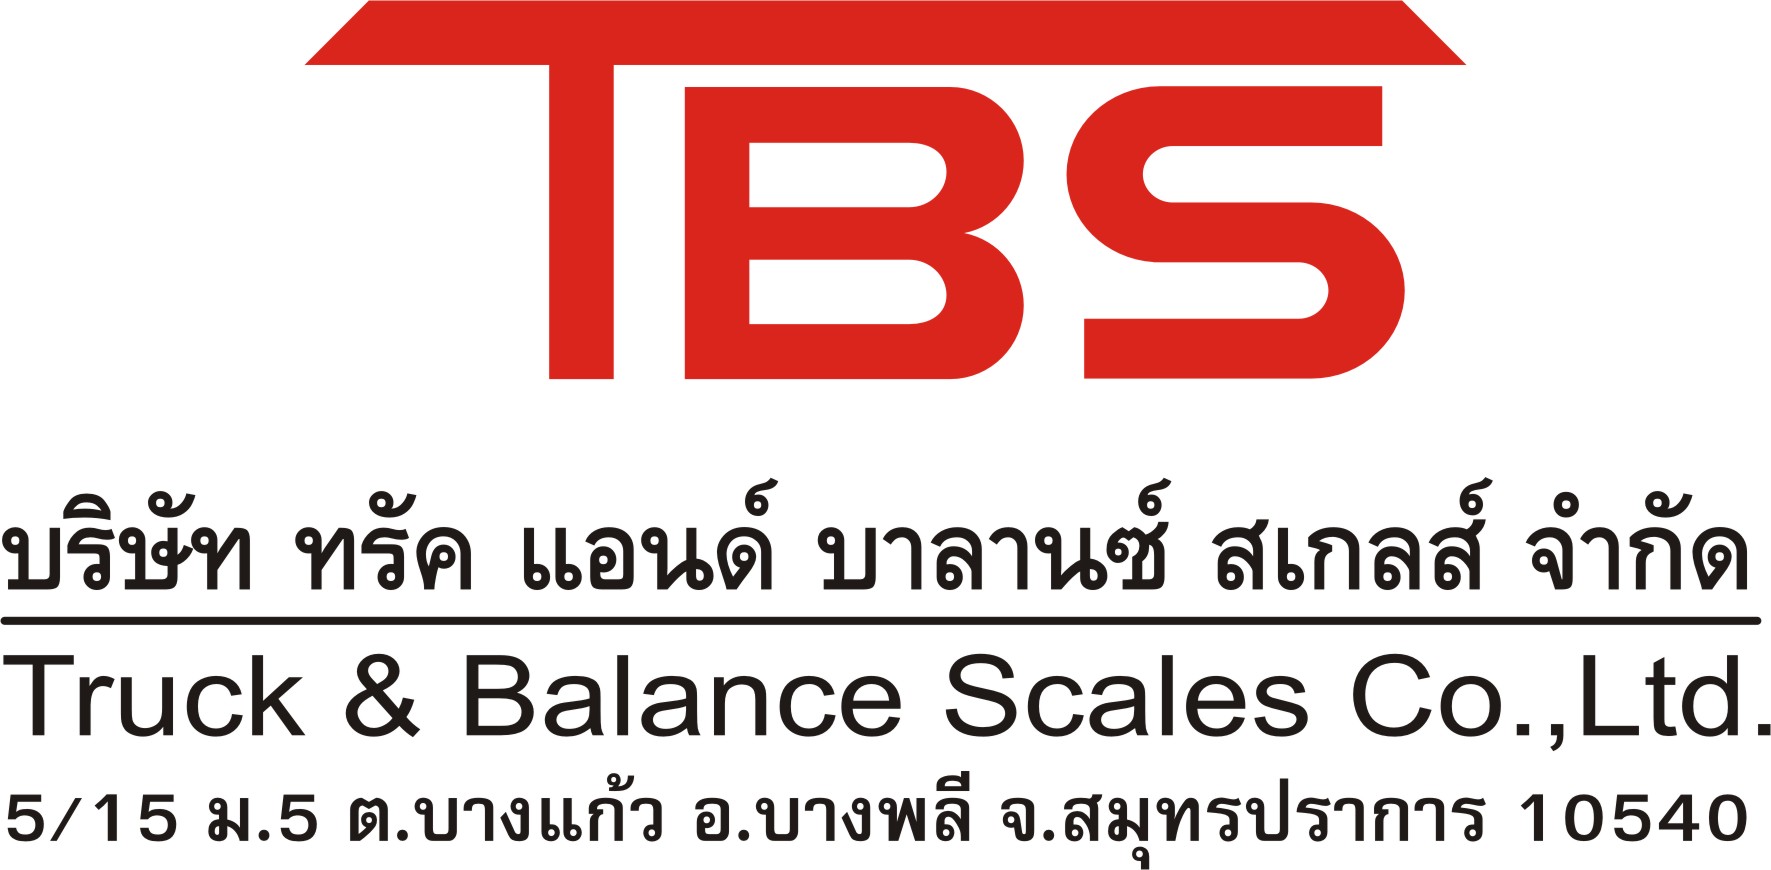 TRUCK & BALANCE SCALES CO.,LTD., บริษัท ทรัค แอนด์ บาลานซ์ สเกลส์ จำกัด